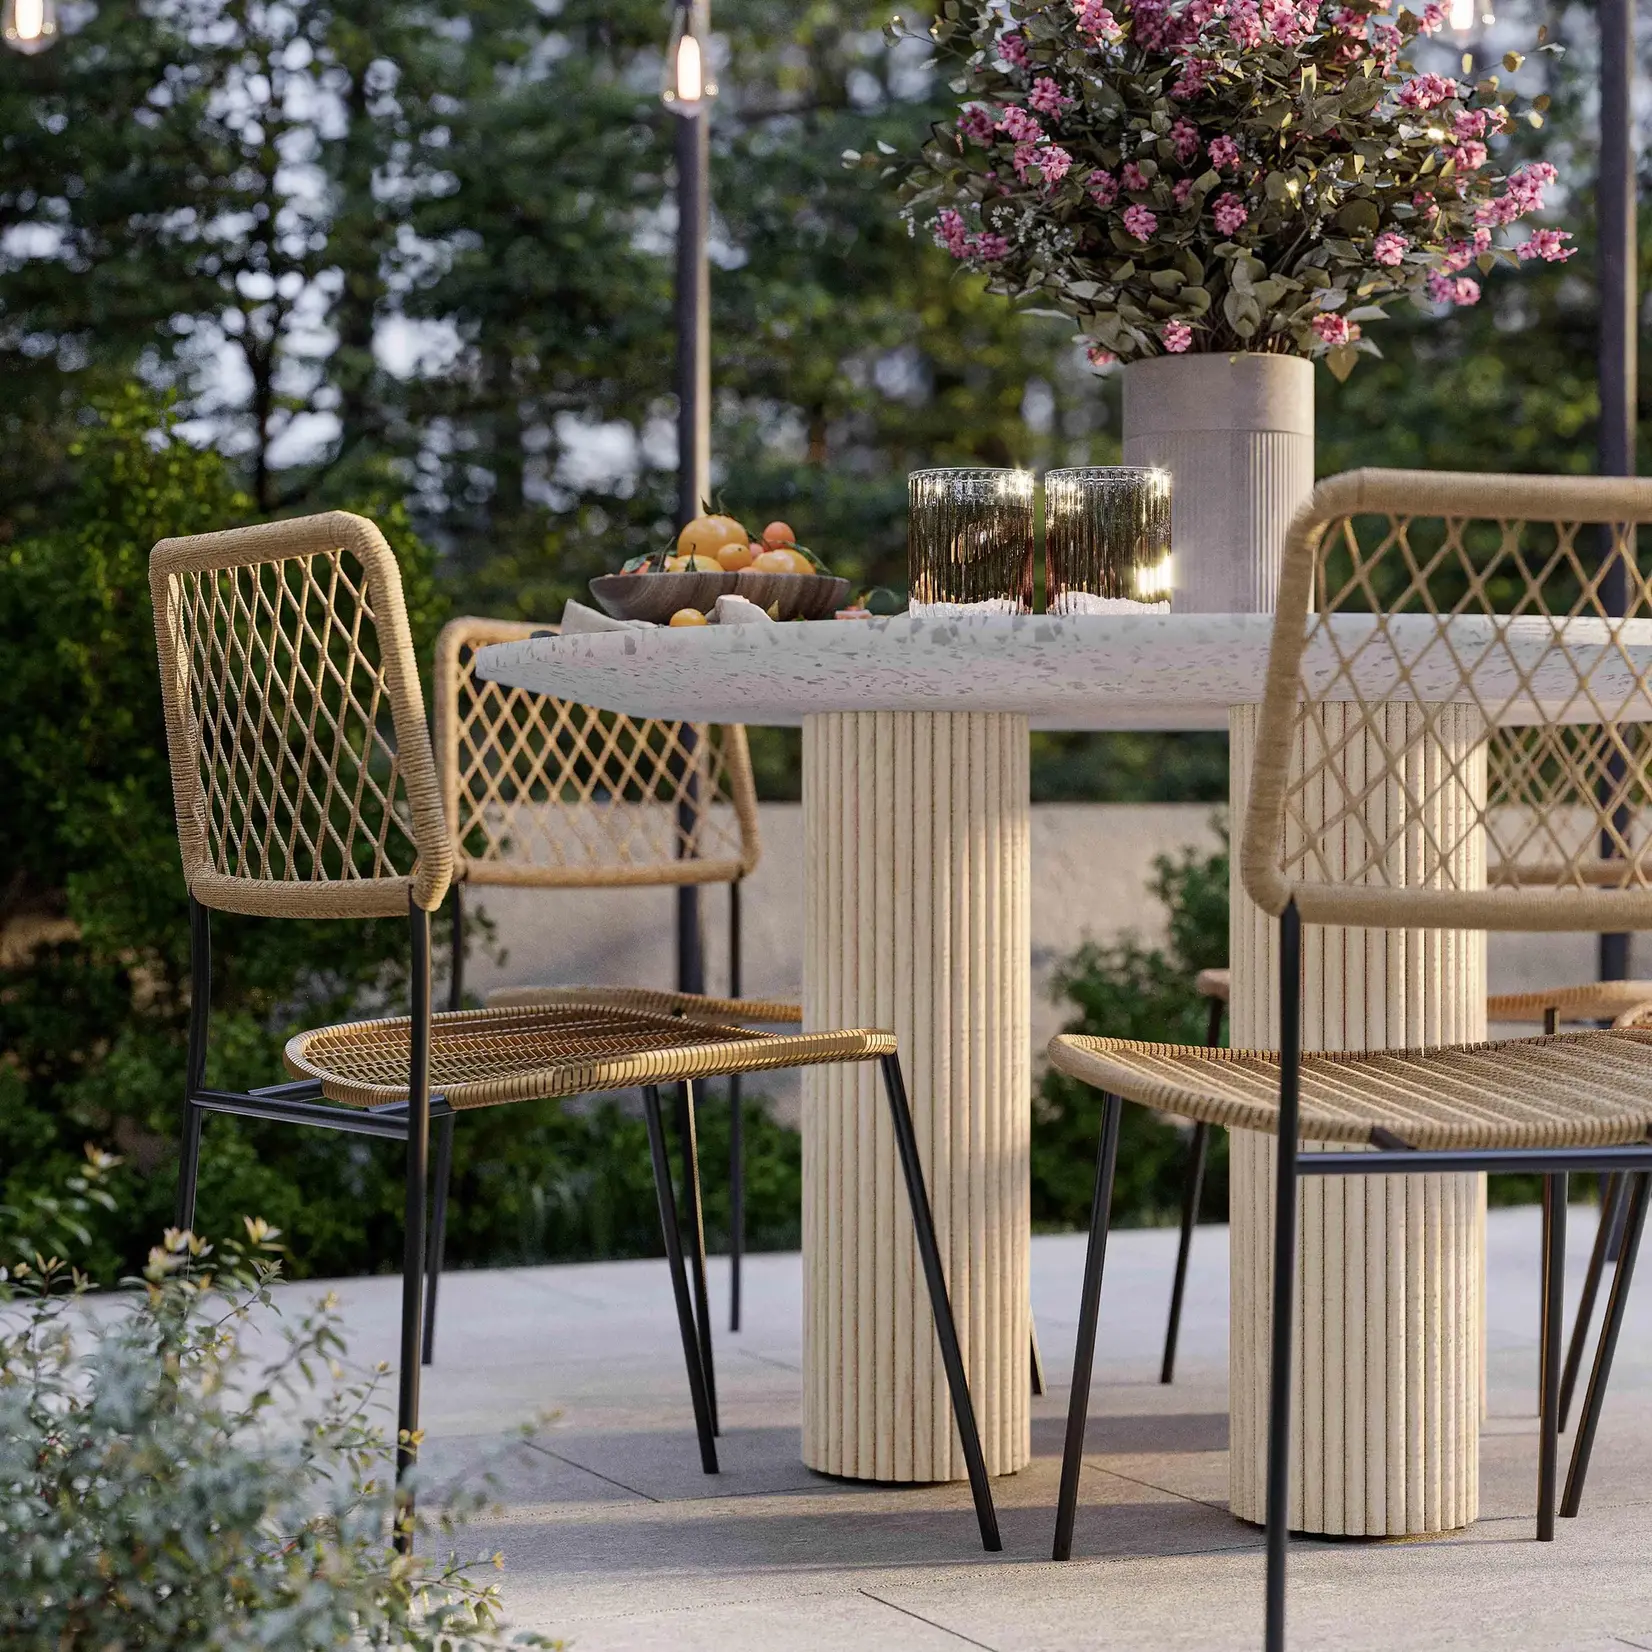 Tov Park Terrazzo Concrete Indoor / Outdoor Dining Table